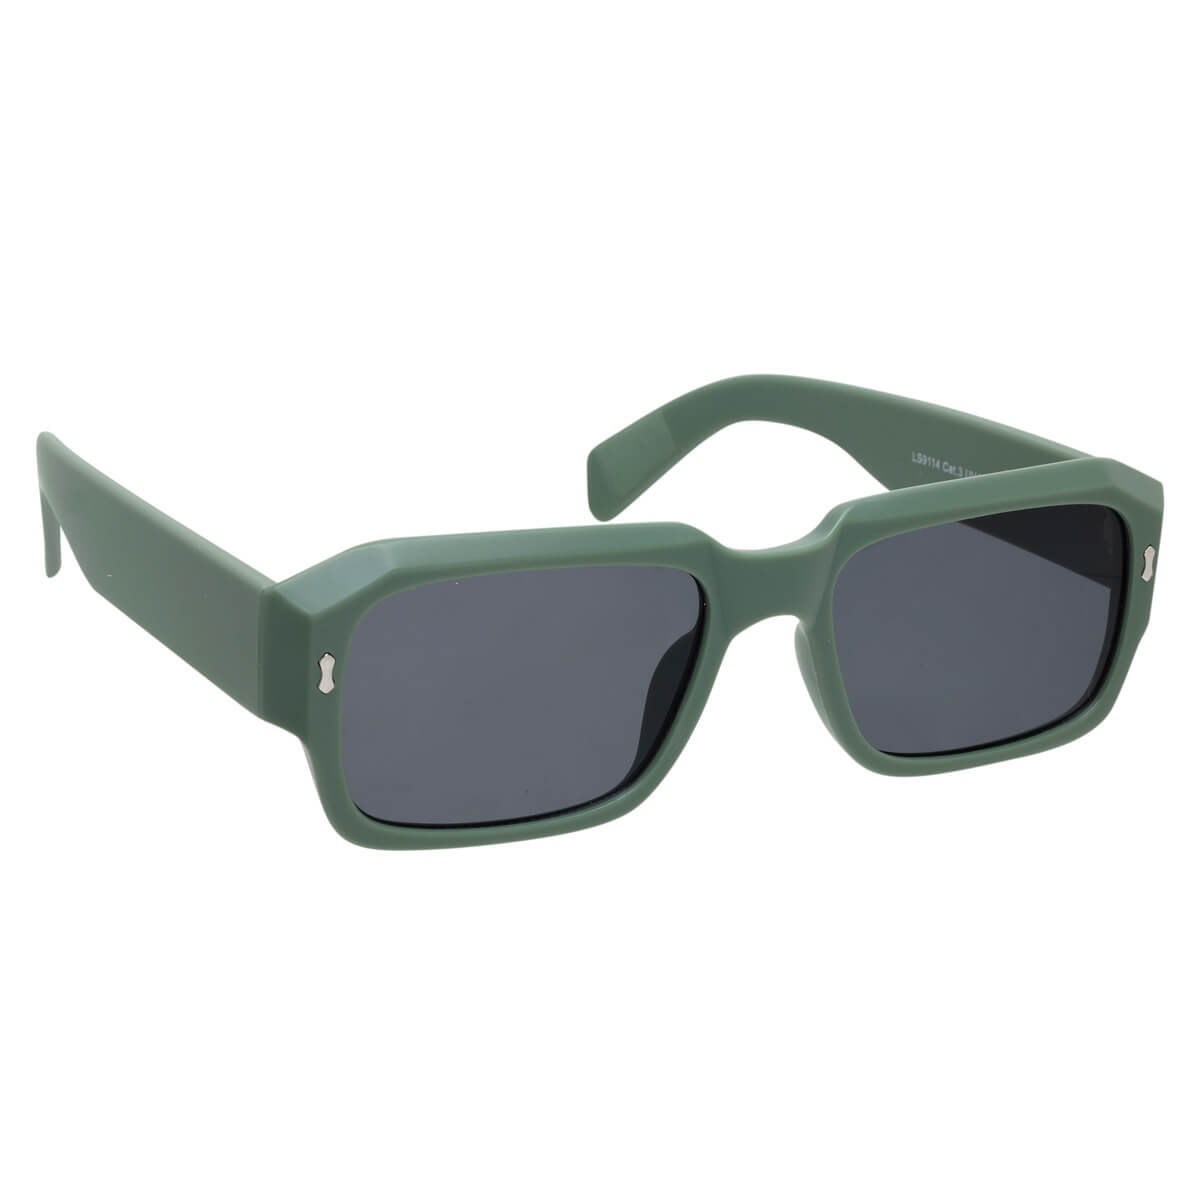 Rectangular angled sunglasses